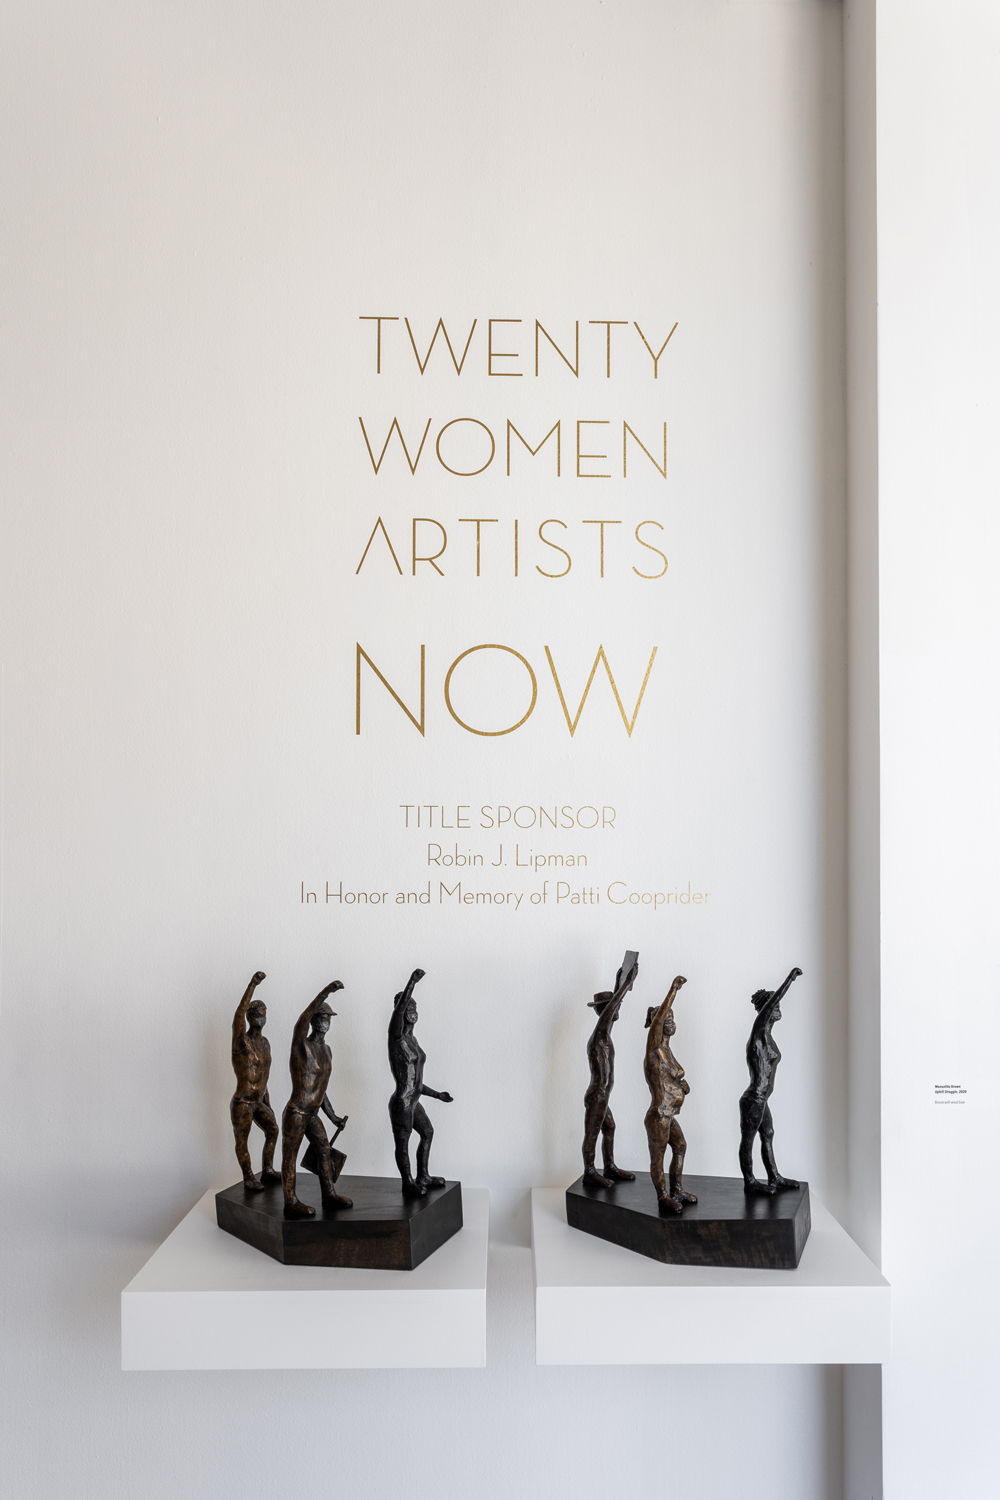 Twenty Women Artists: NOW Exhibition entrance